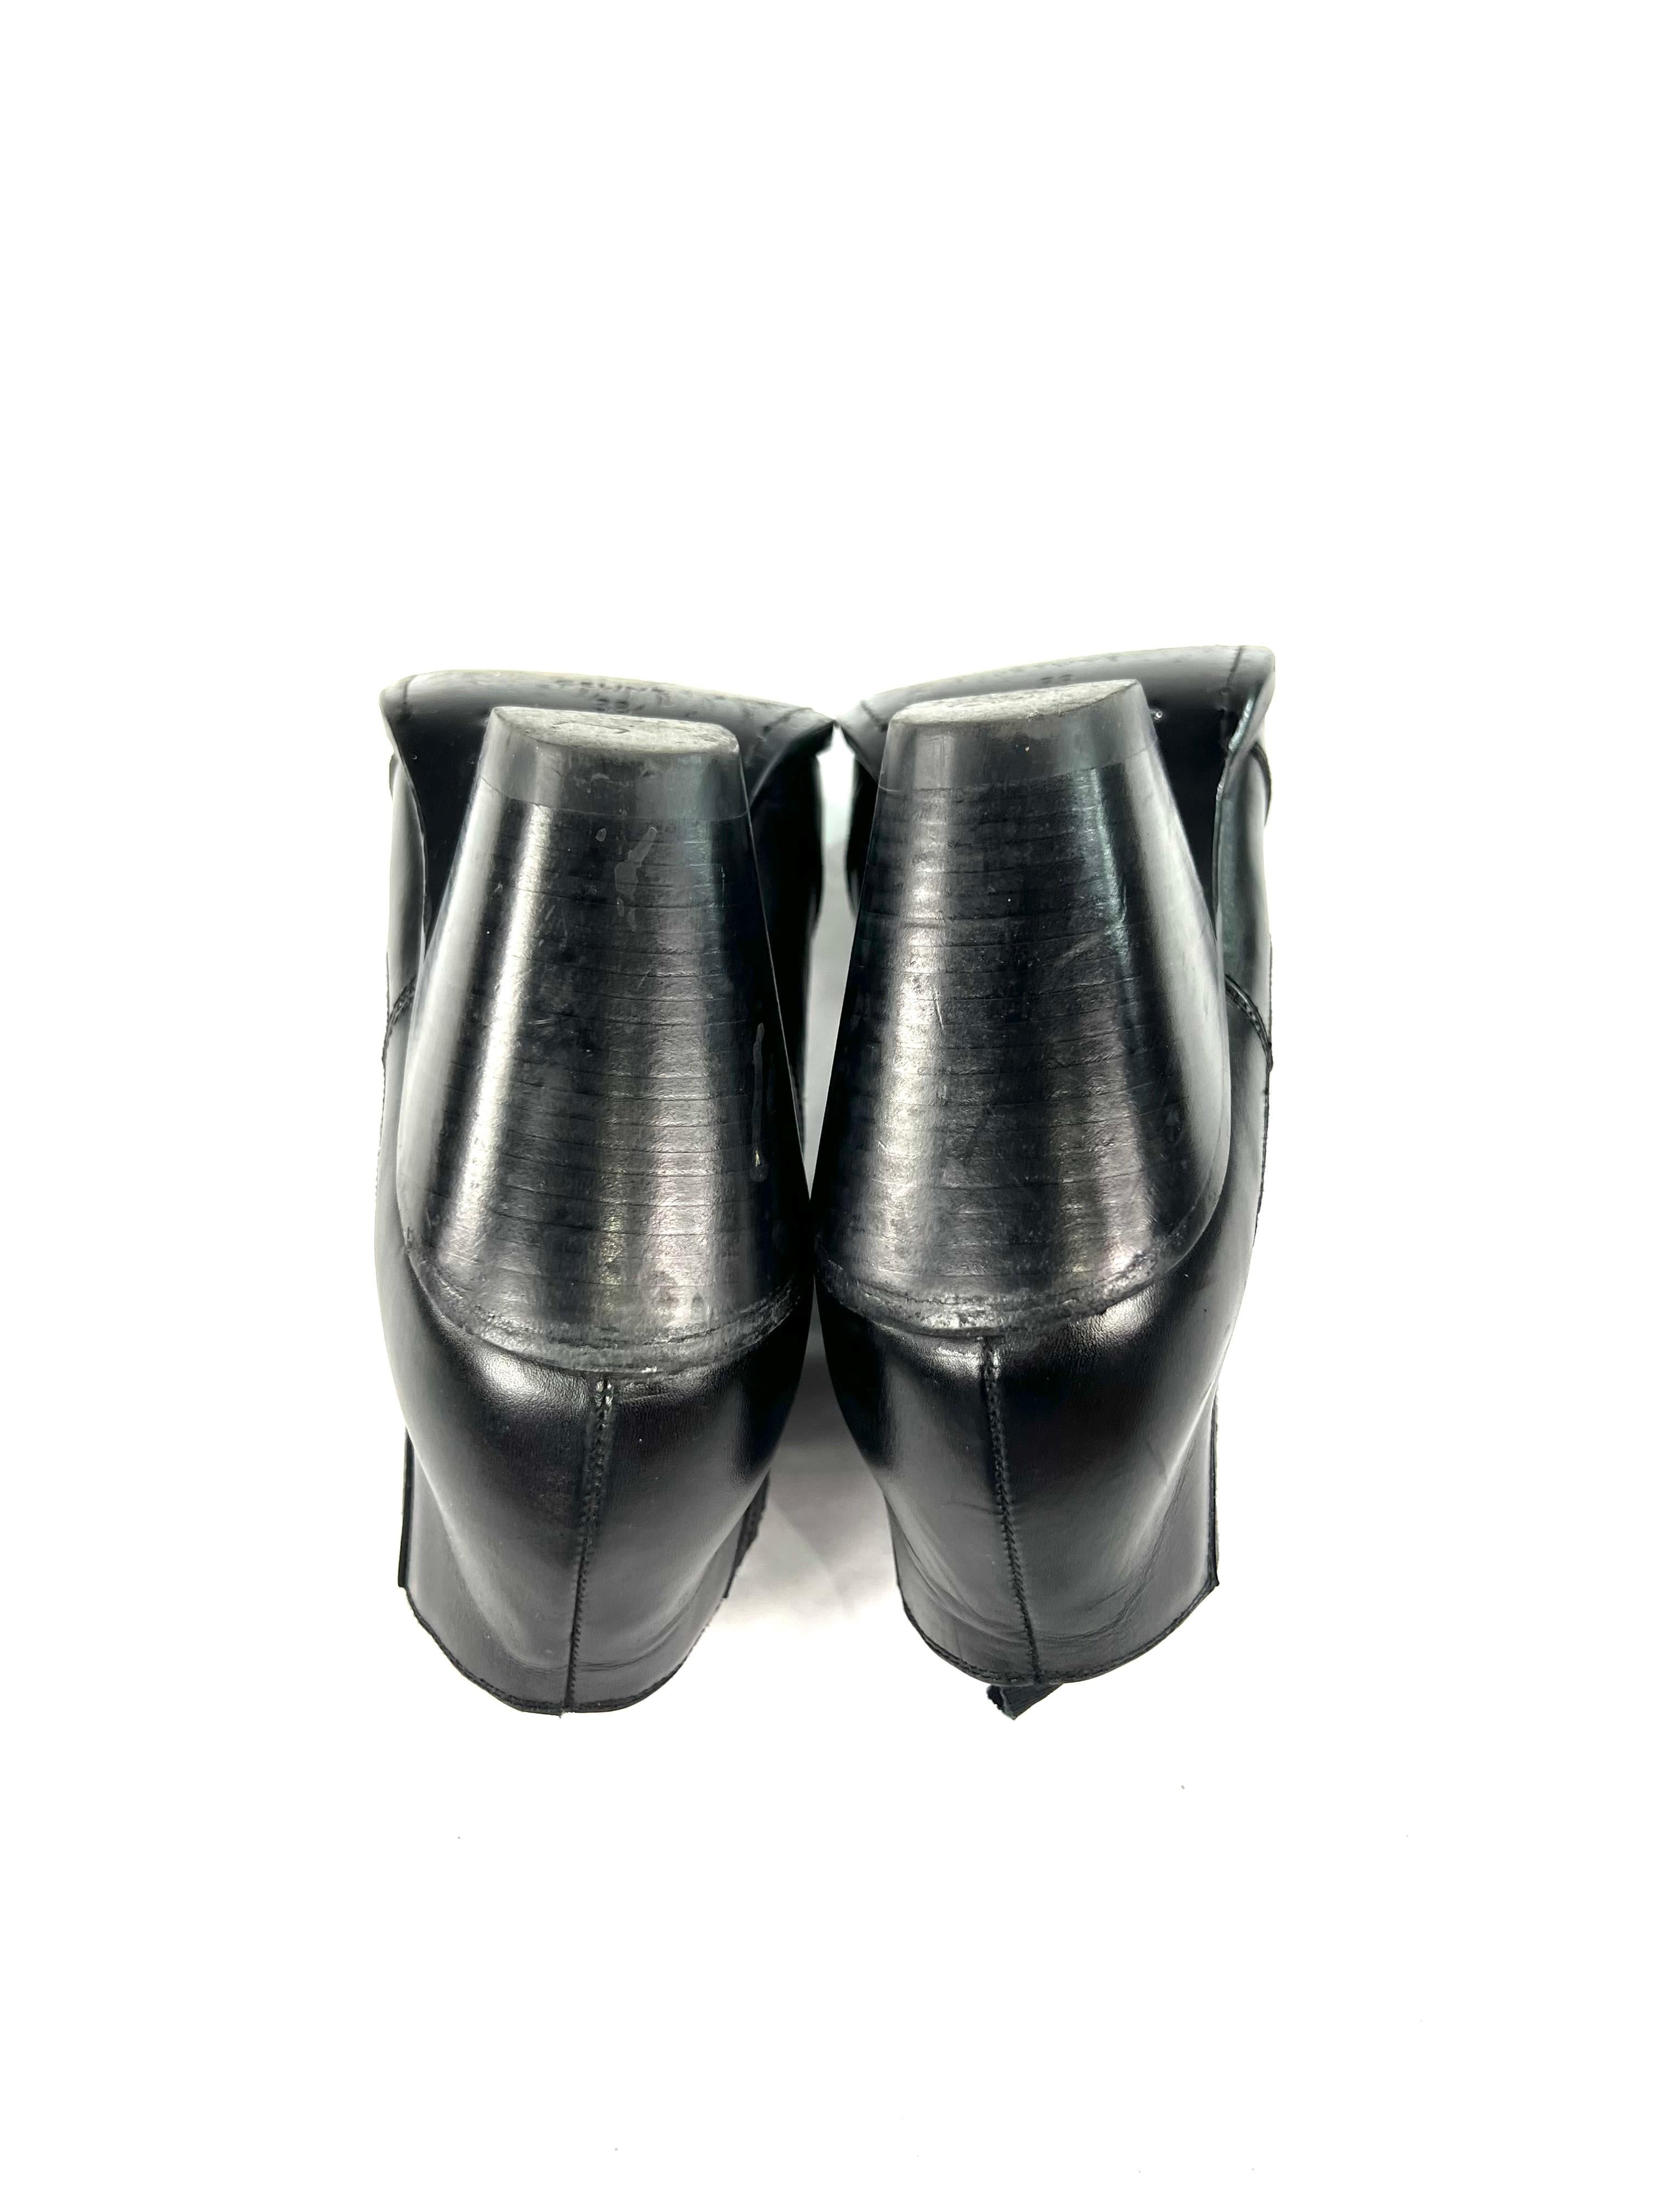 Celine Black Leather Bootie, Size 38 For Sale 1